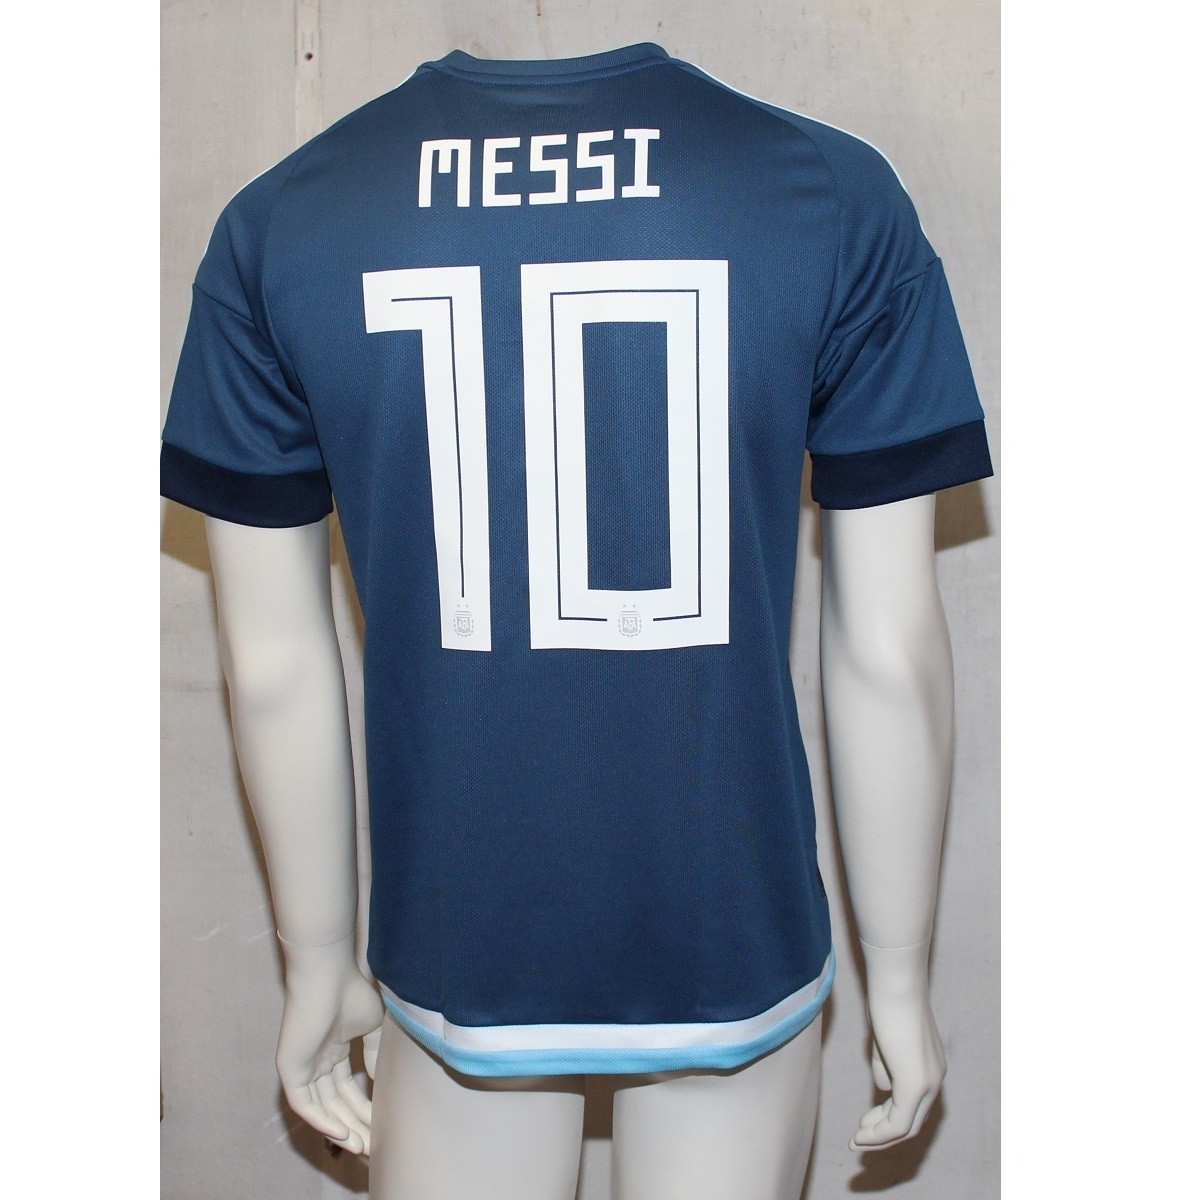 Adidas Argentina Away Jersey 2015 Copa America - Men's, Short Sleeve